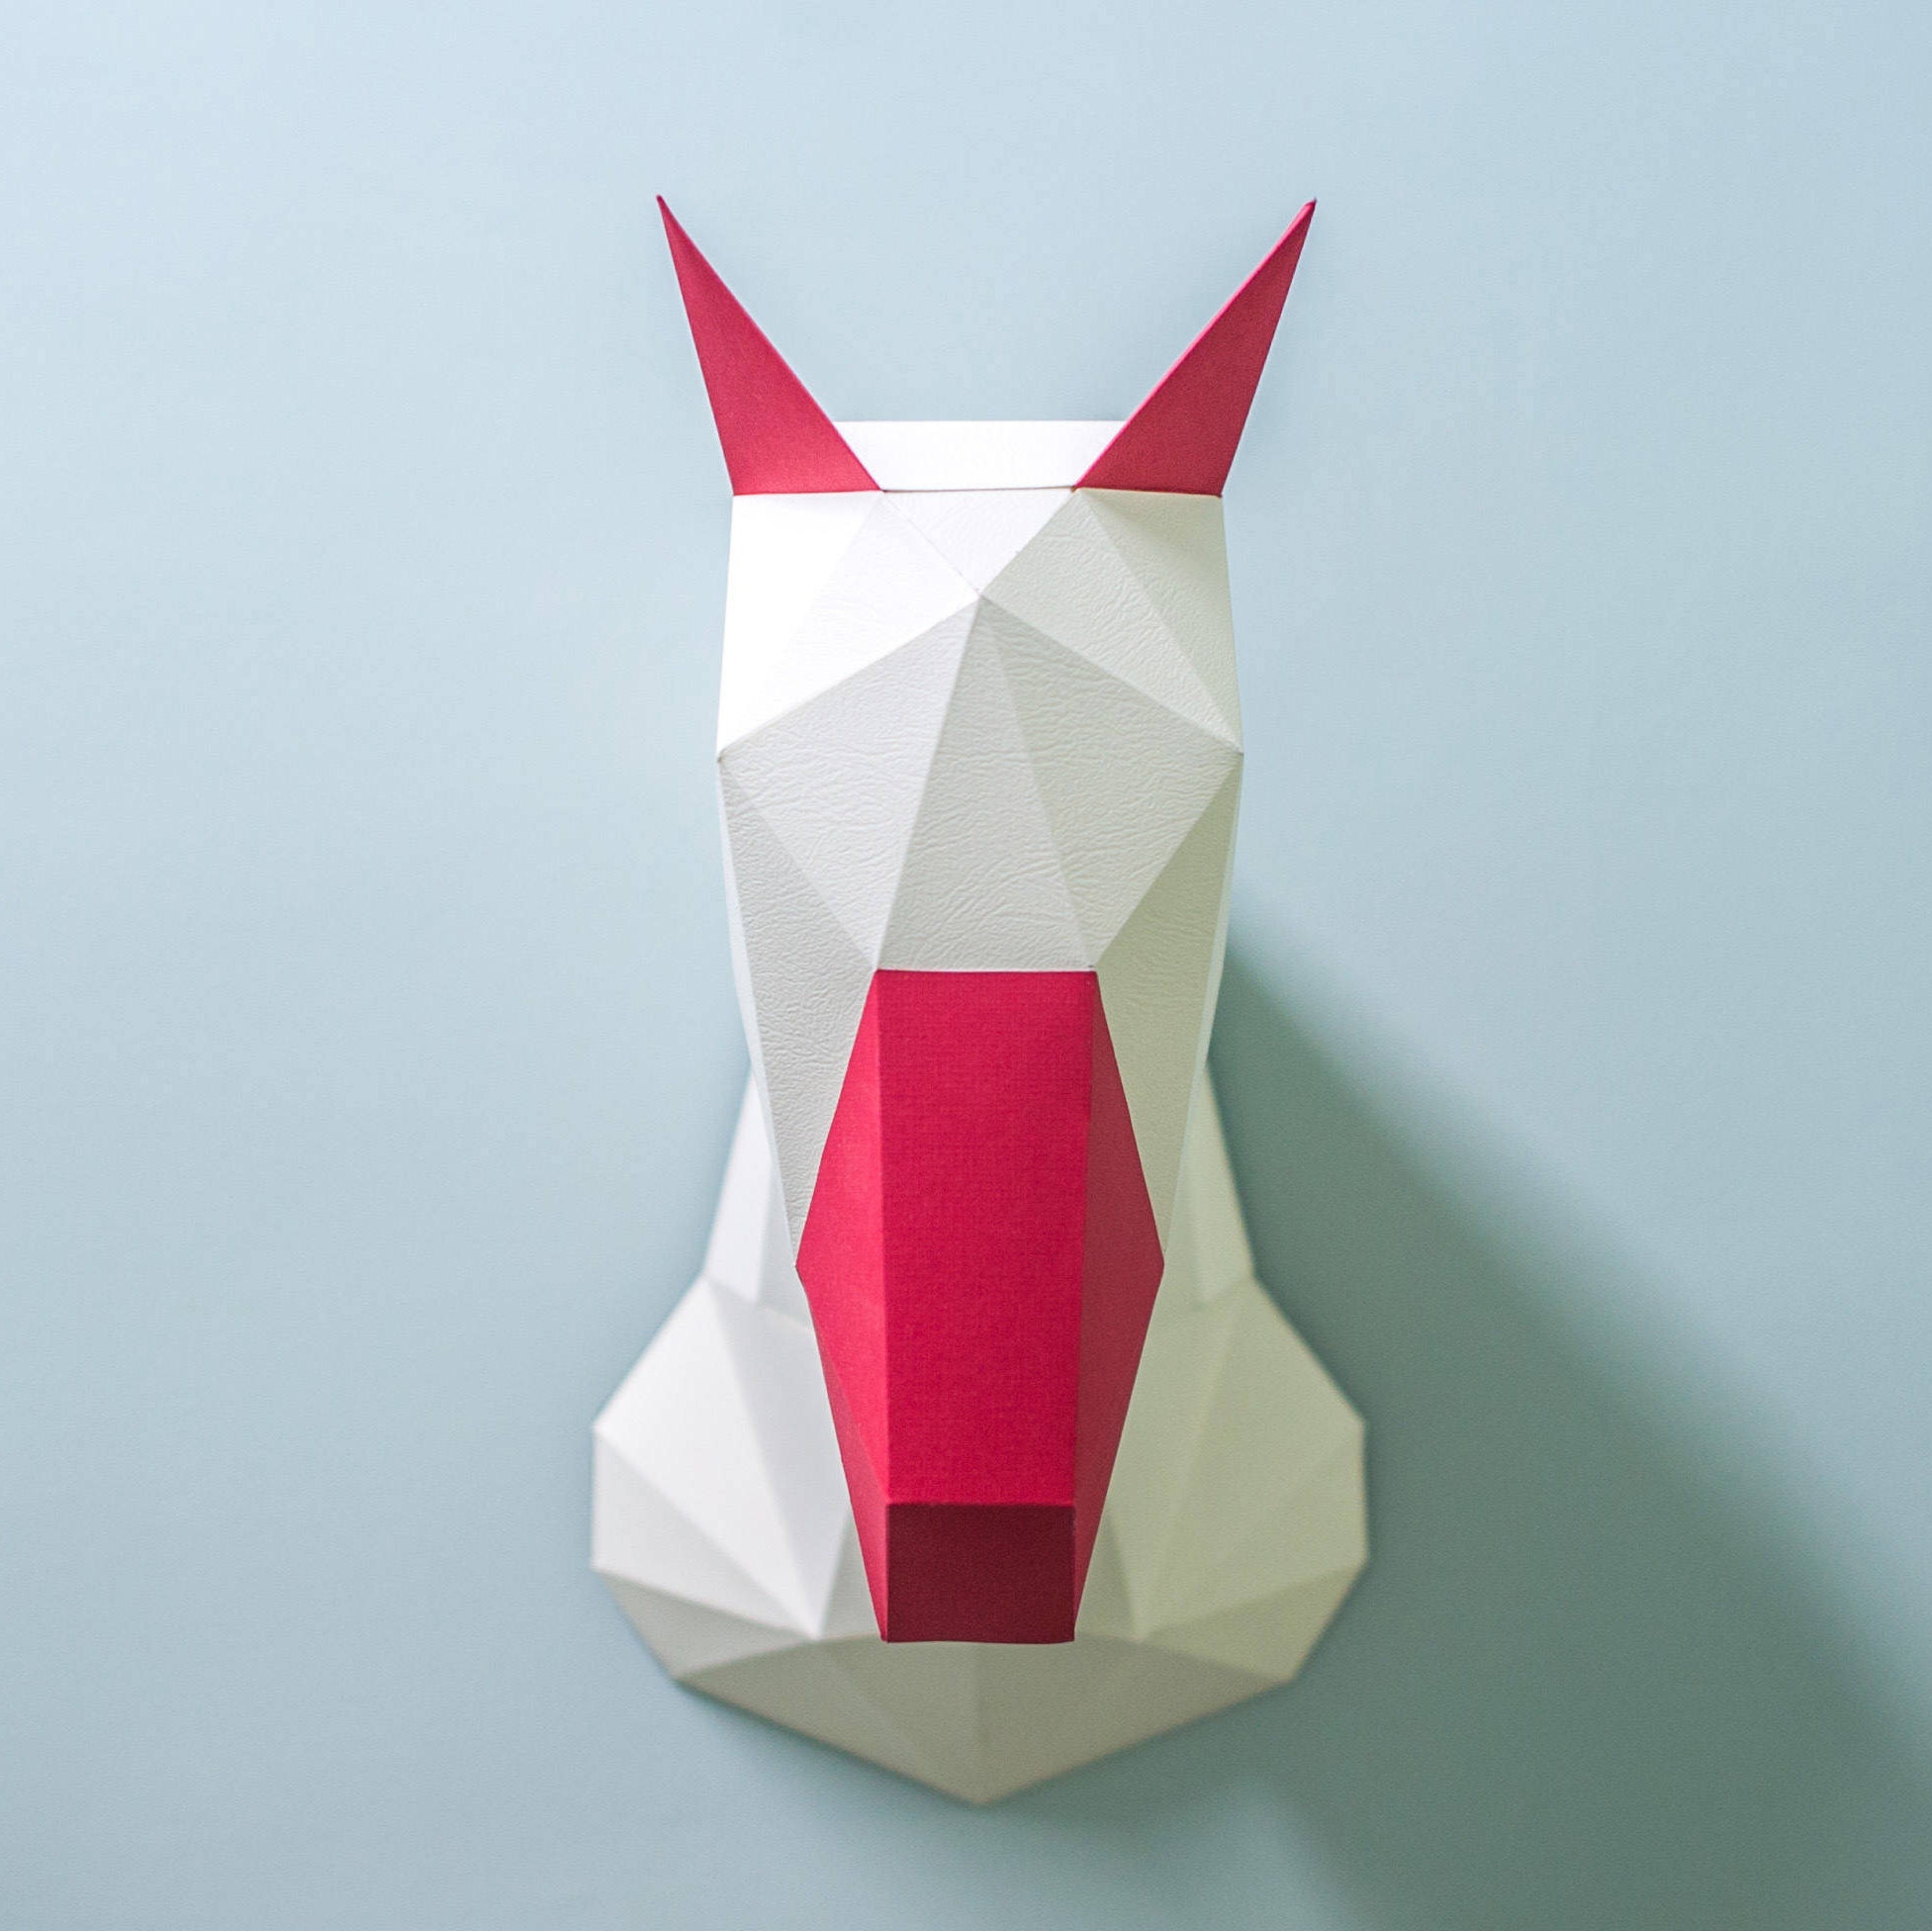 Papercraft unicorn horse shield. symmetrical . for home | Etsy